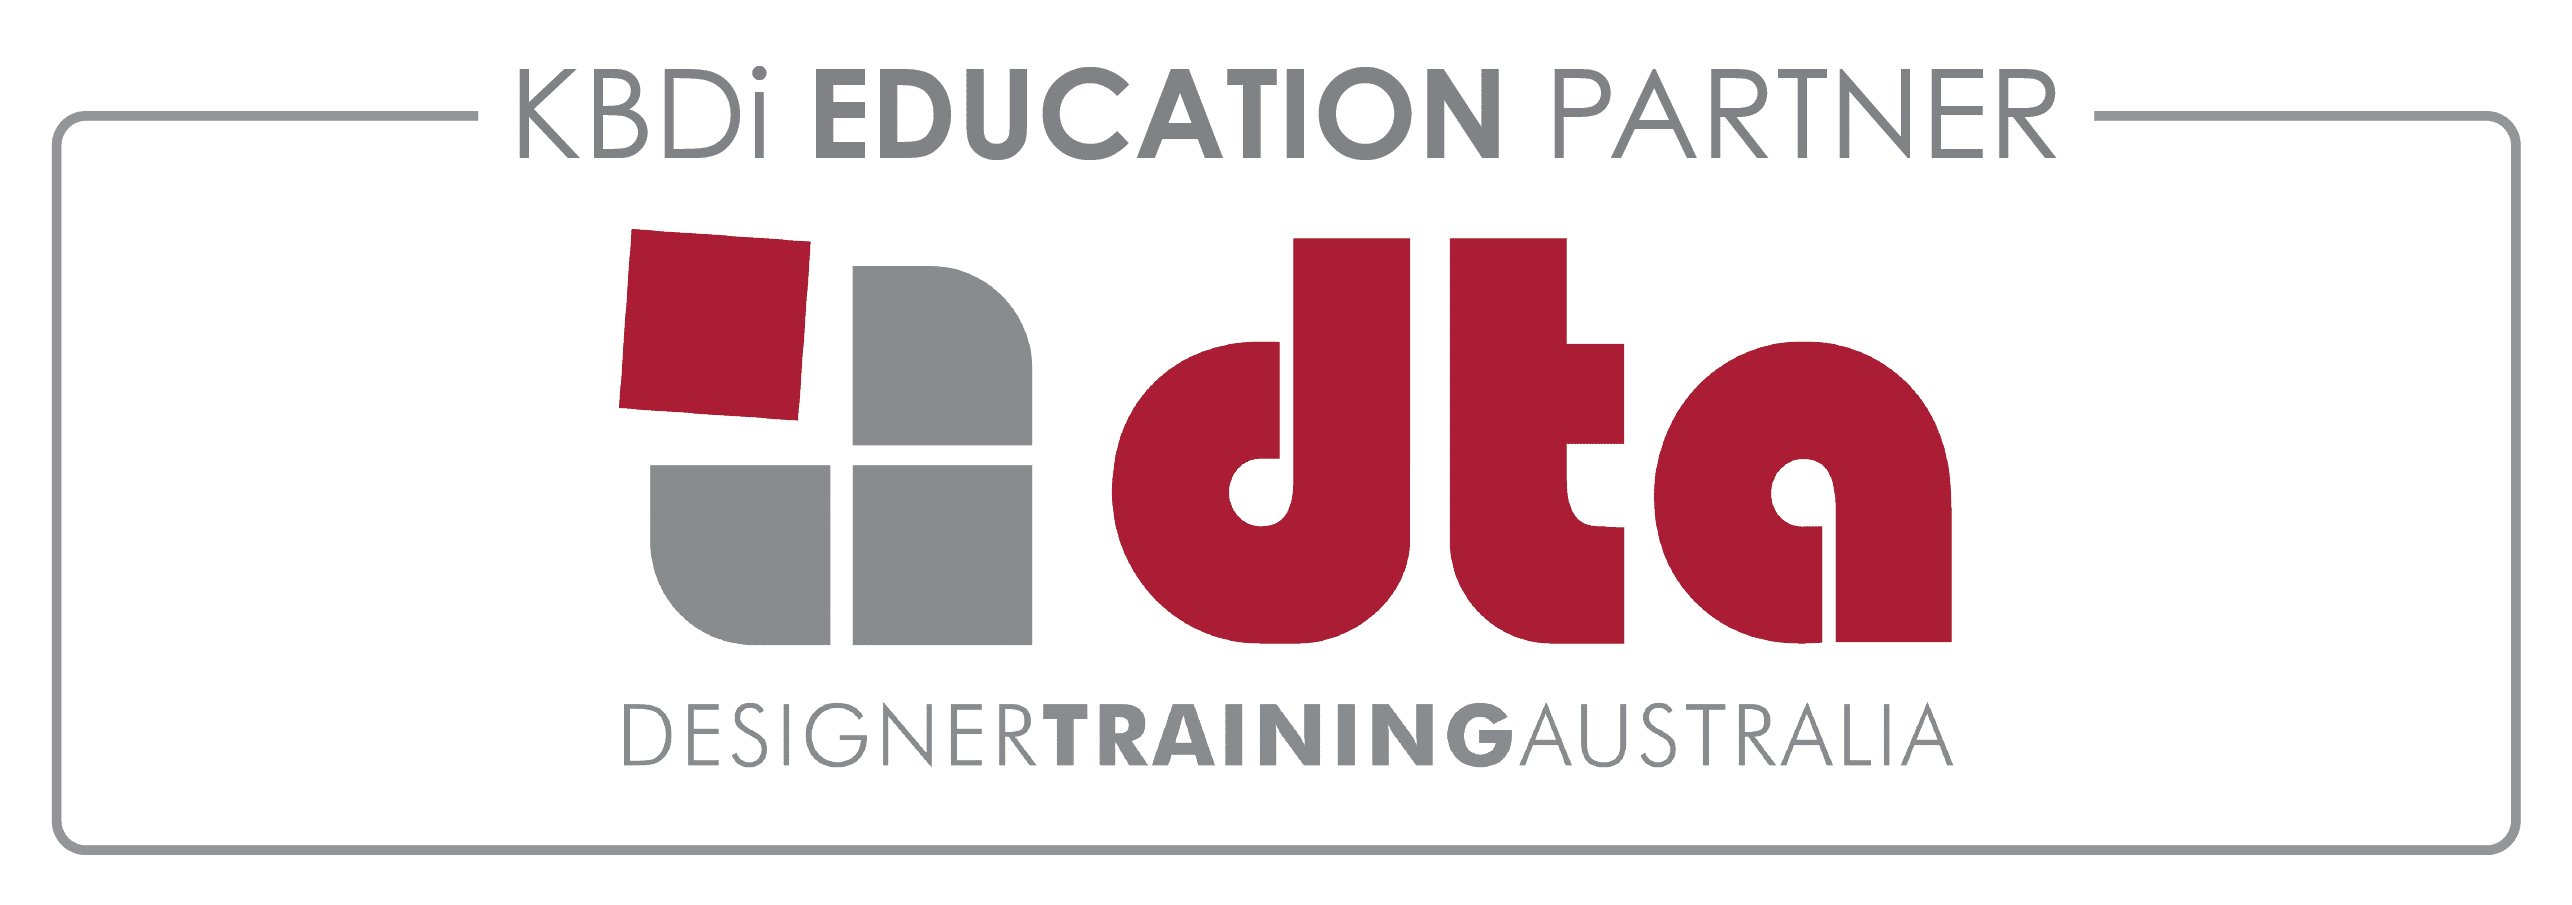 KBDi Education Partner Designer Training Australia